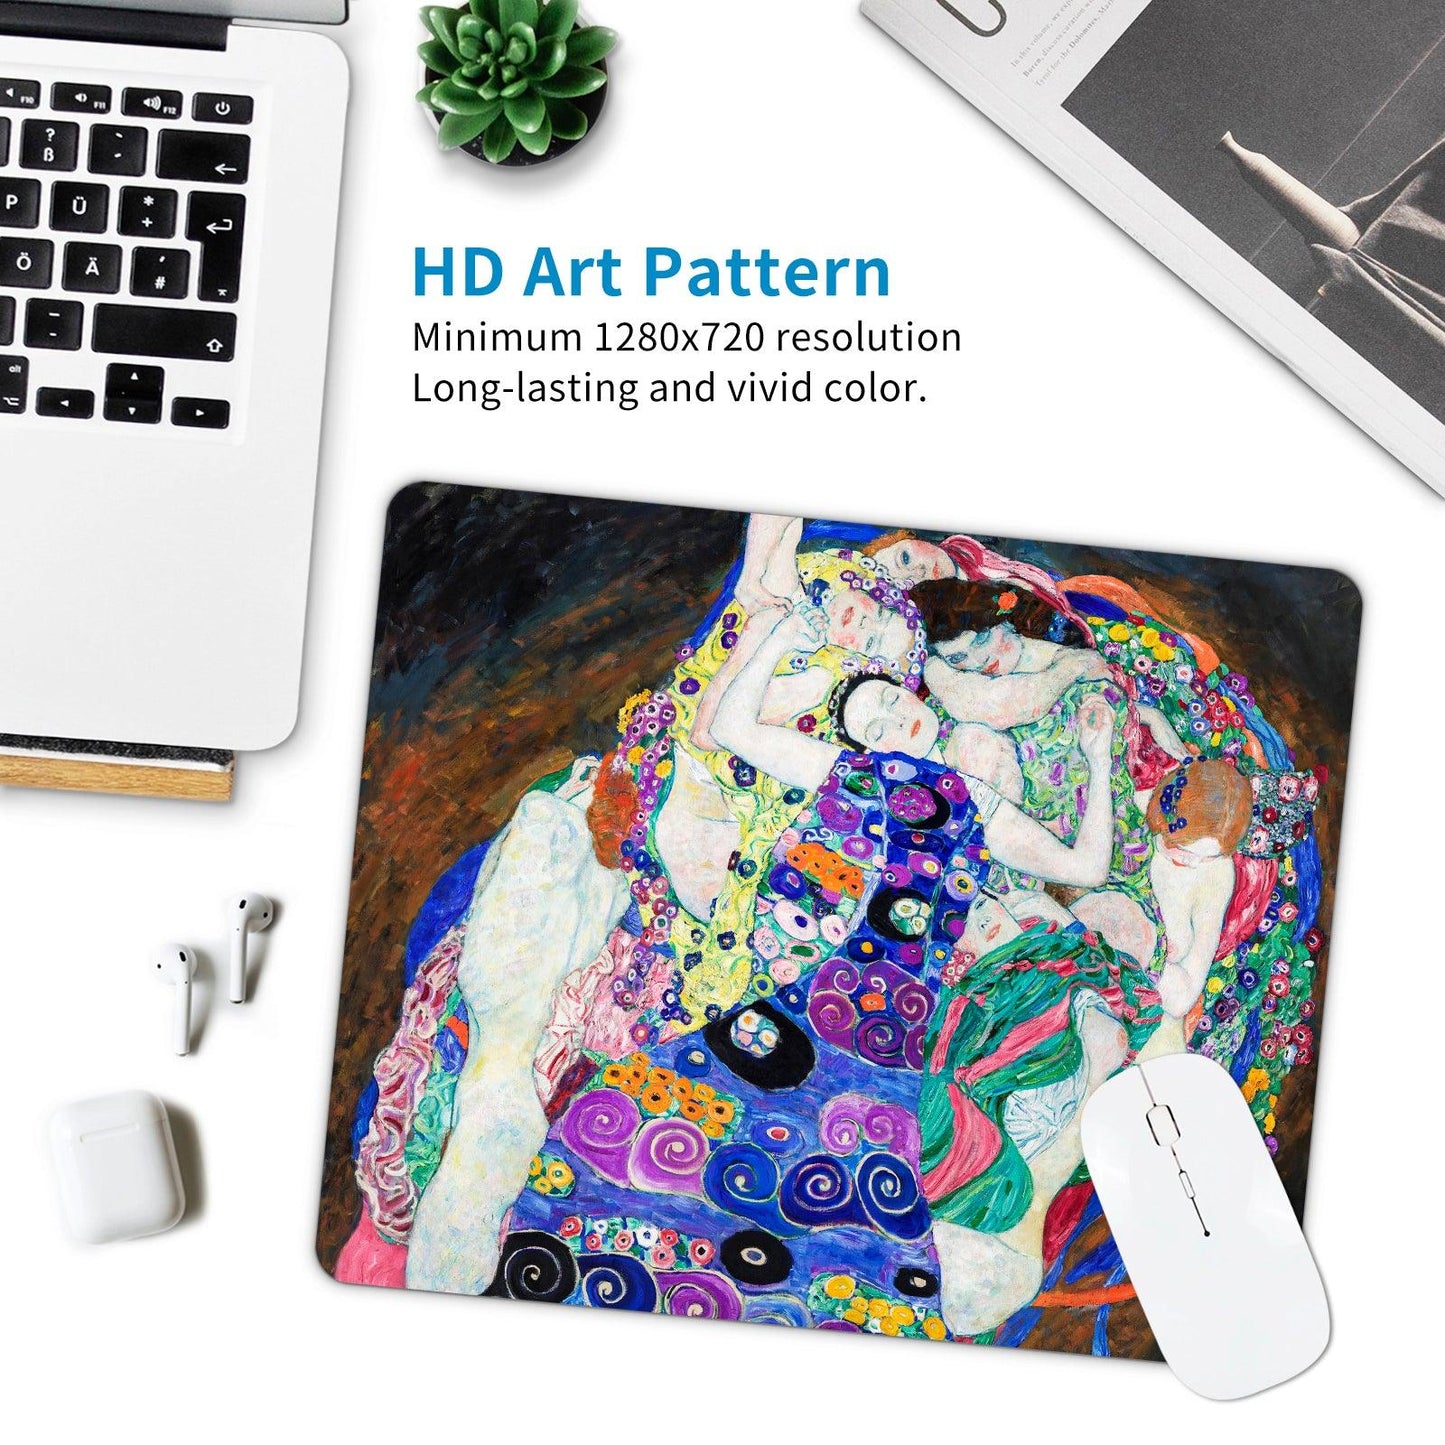 Art Square Mouse Pad 9.5 x 7.9 Inches (The Virgin by Gustav Klimt) - Berkin Arts